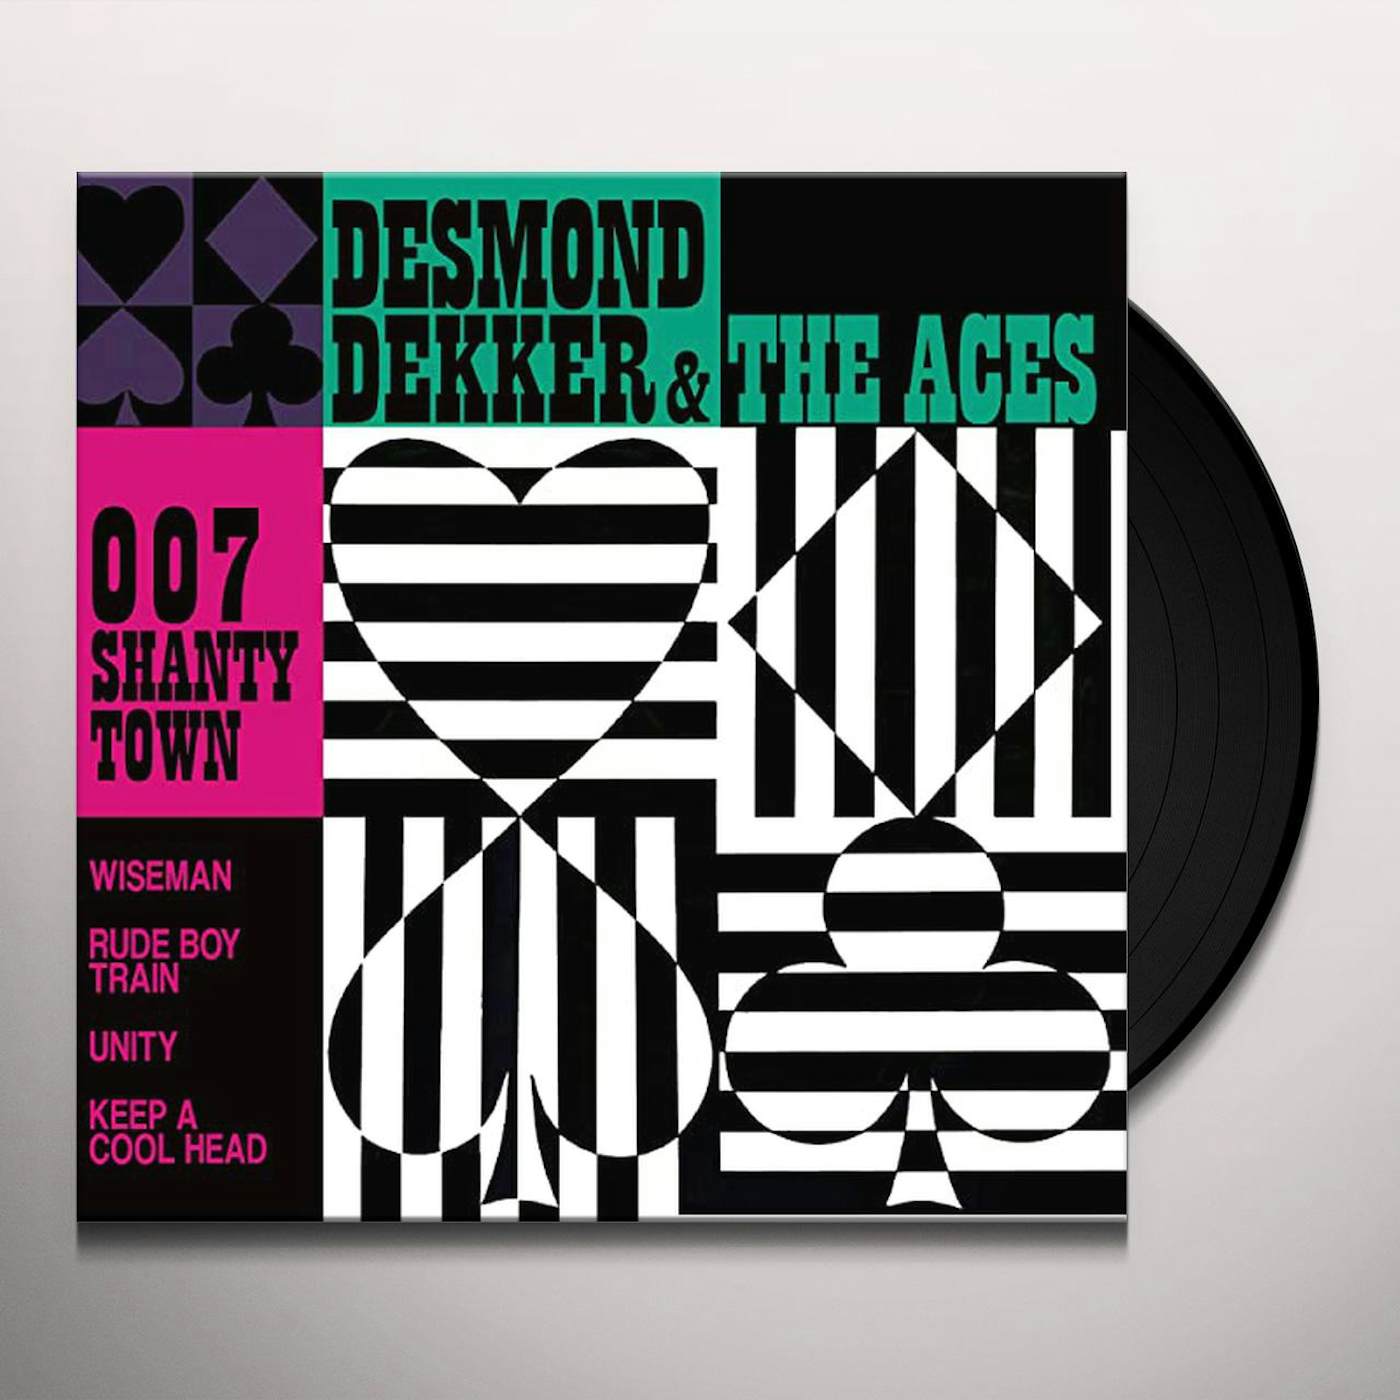 Desmond Dekker & The Aces 007 SHANTY TOWN (LIMITED ORANGE 180G AUDIOPHILE VINYL) Vinyl Record